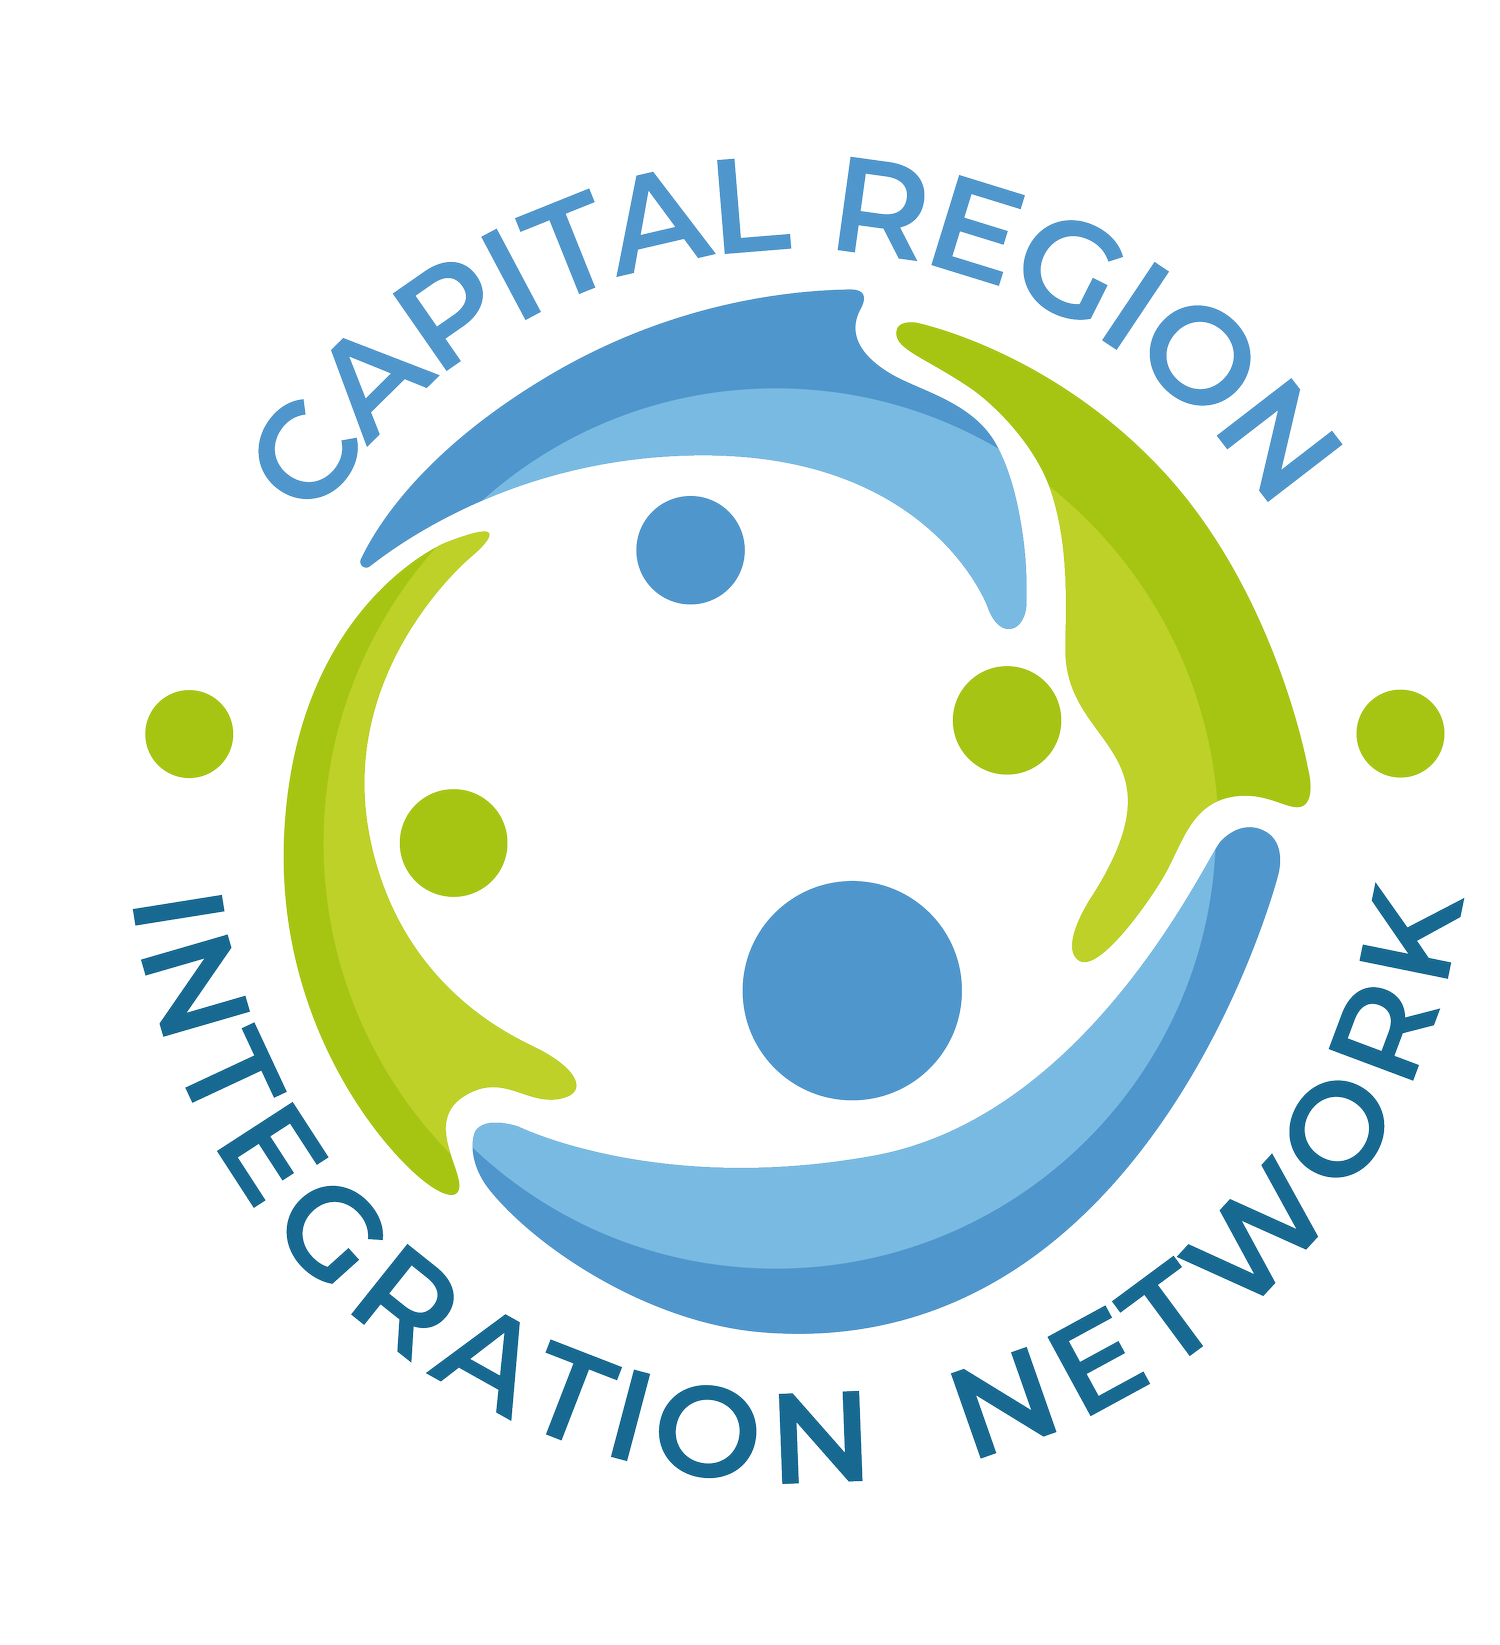 Capital Region integration Network